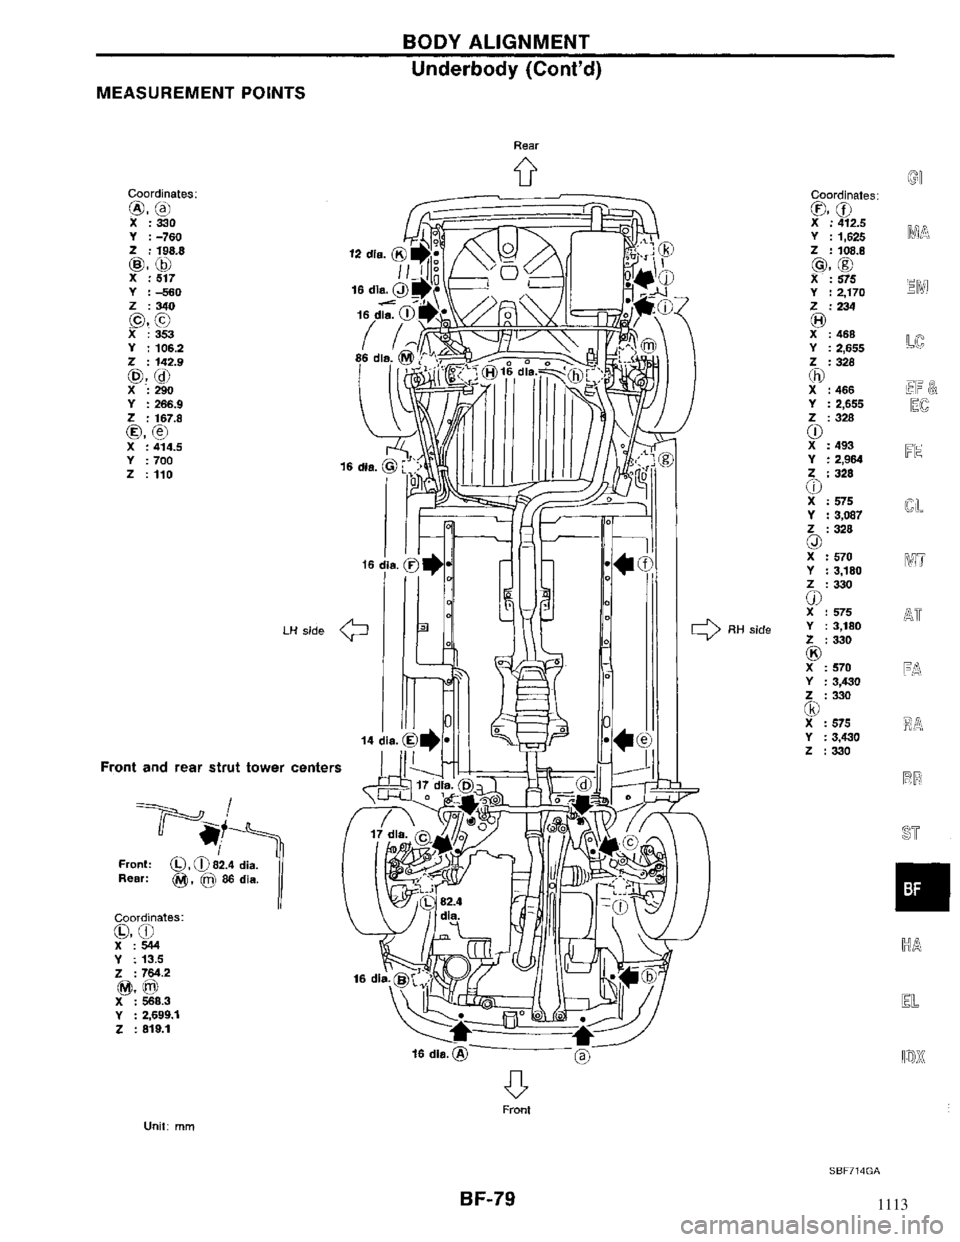 NISSAN MAXIMA 1994 A32 / 4.G Body Manual PDF 1113 